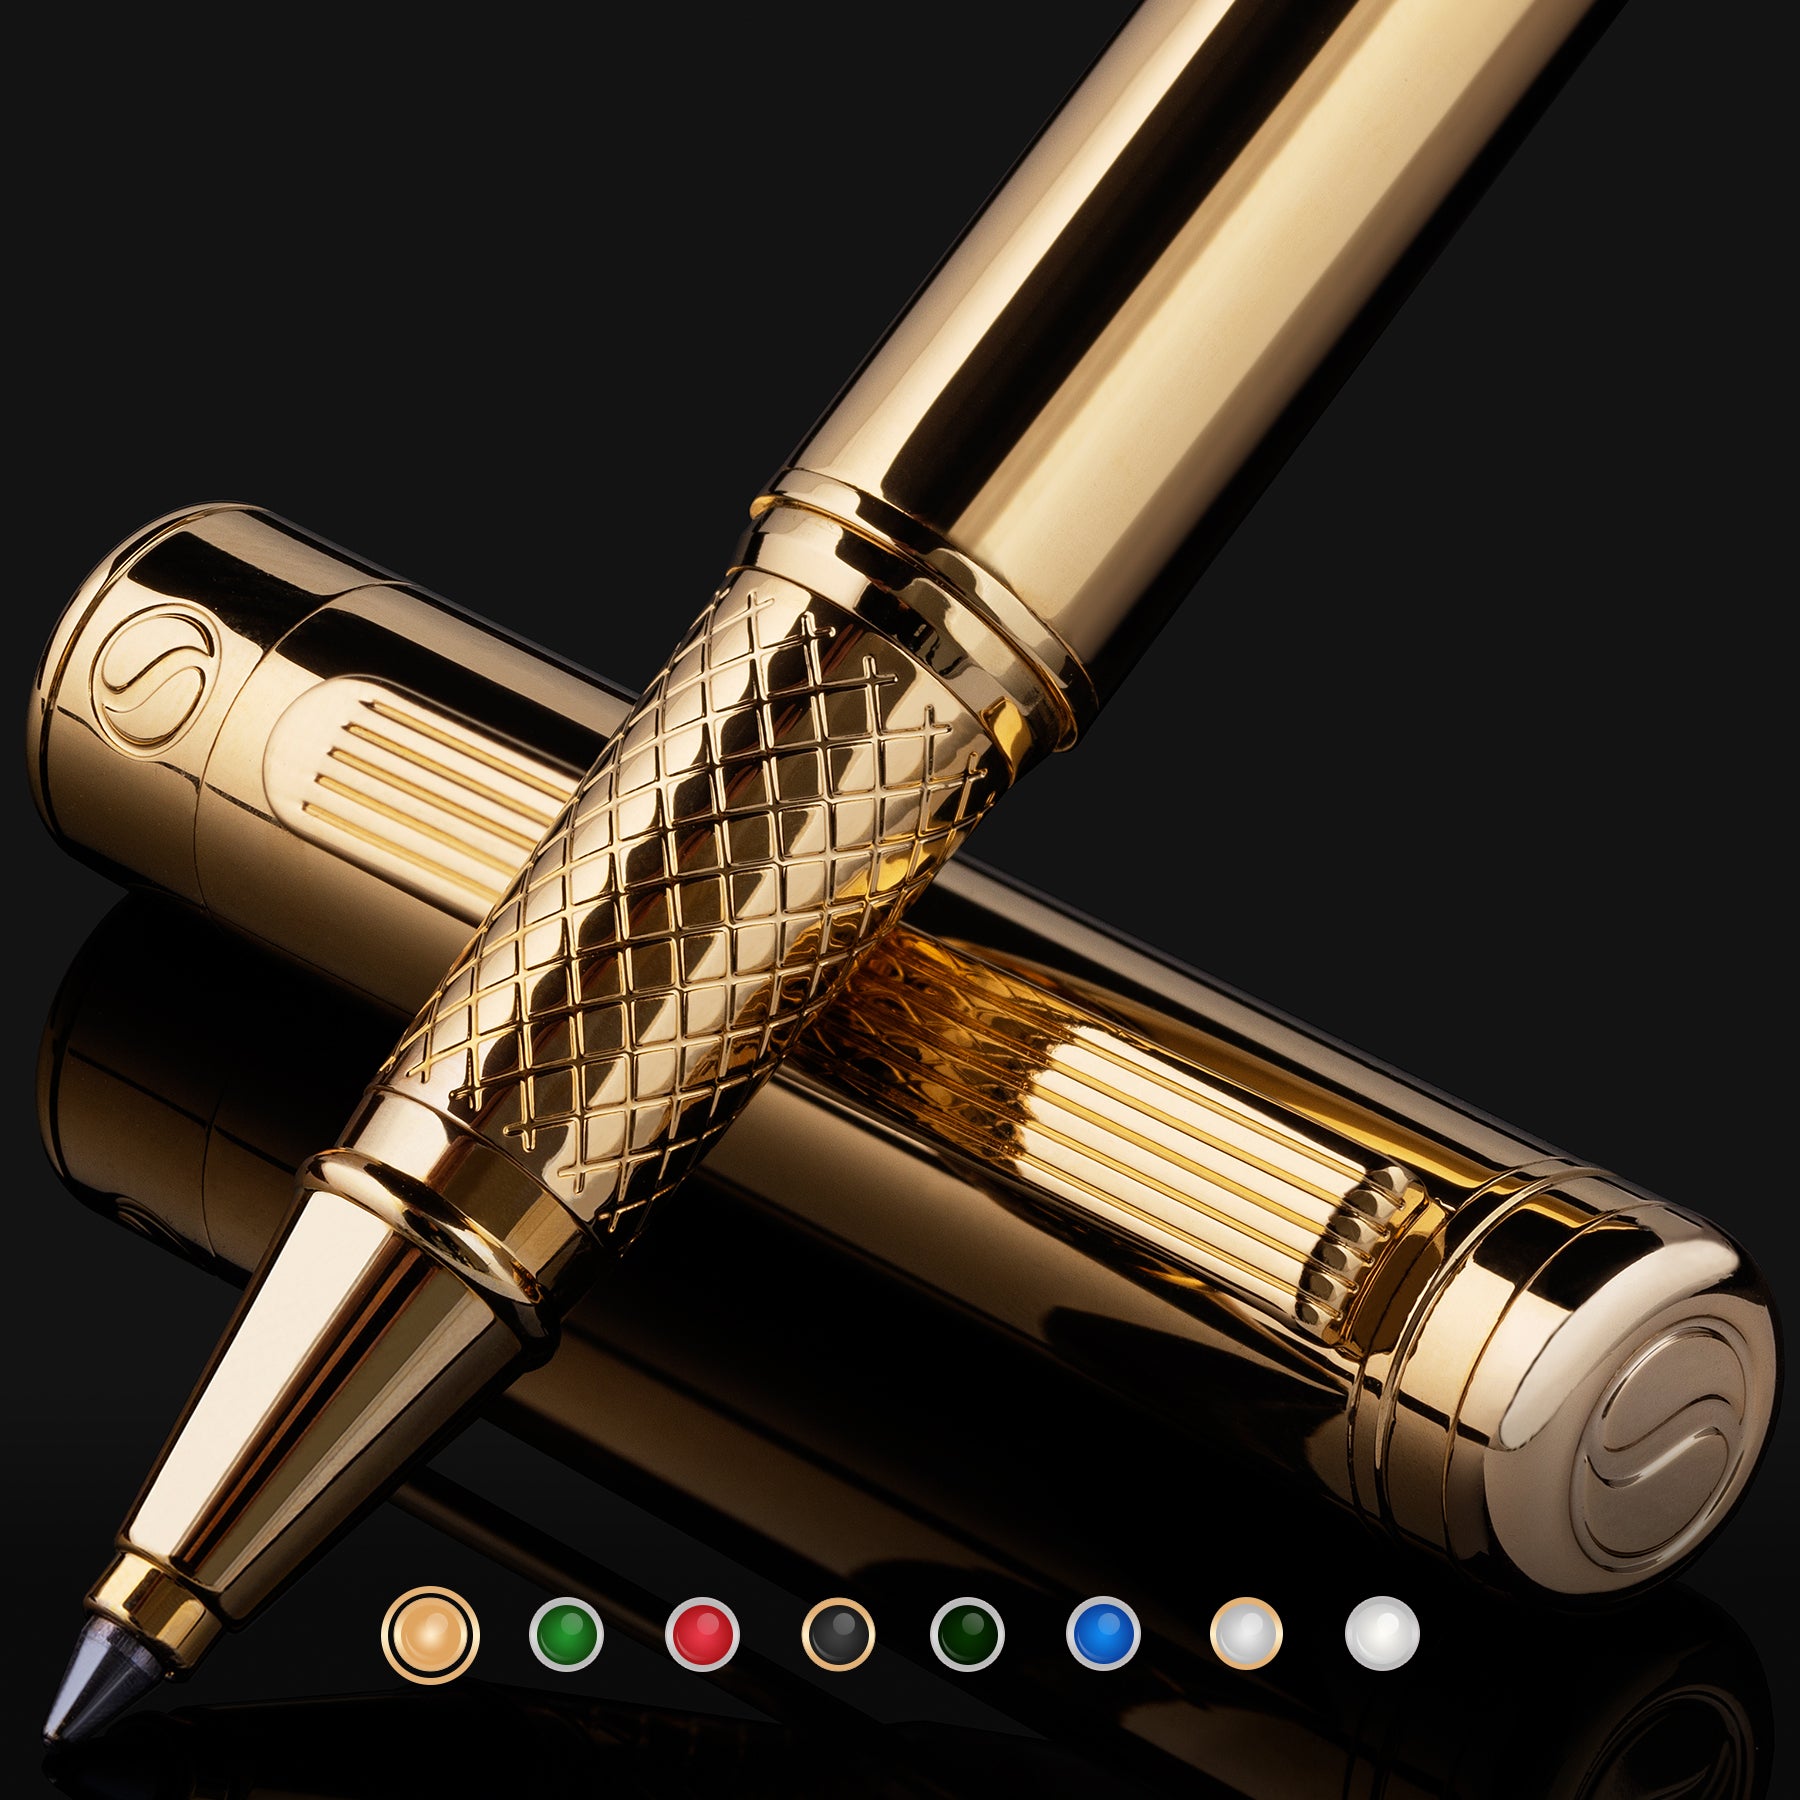 Luxury Executive Pens & Writing Instruments